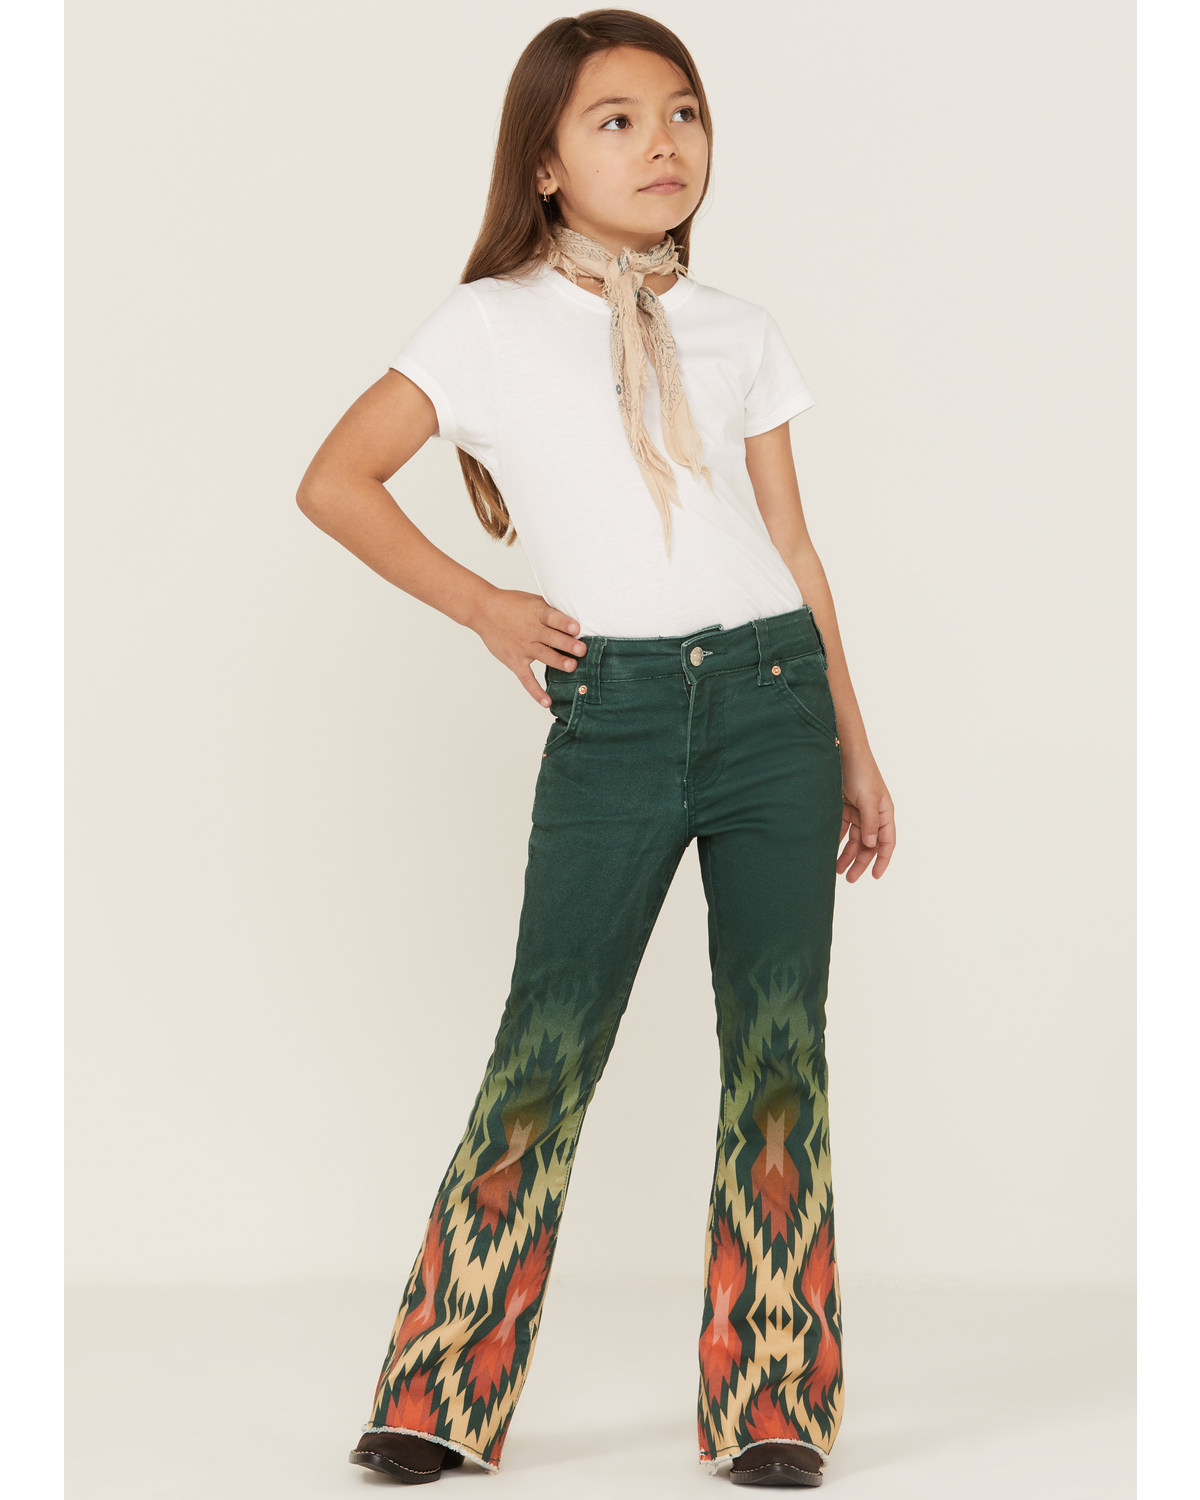 Ranch Dress'n Girls' Southwestern Print Flare Jeans